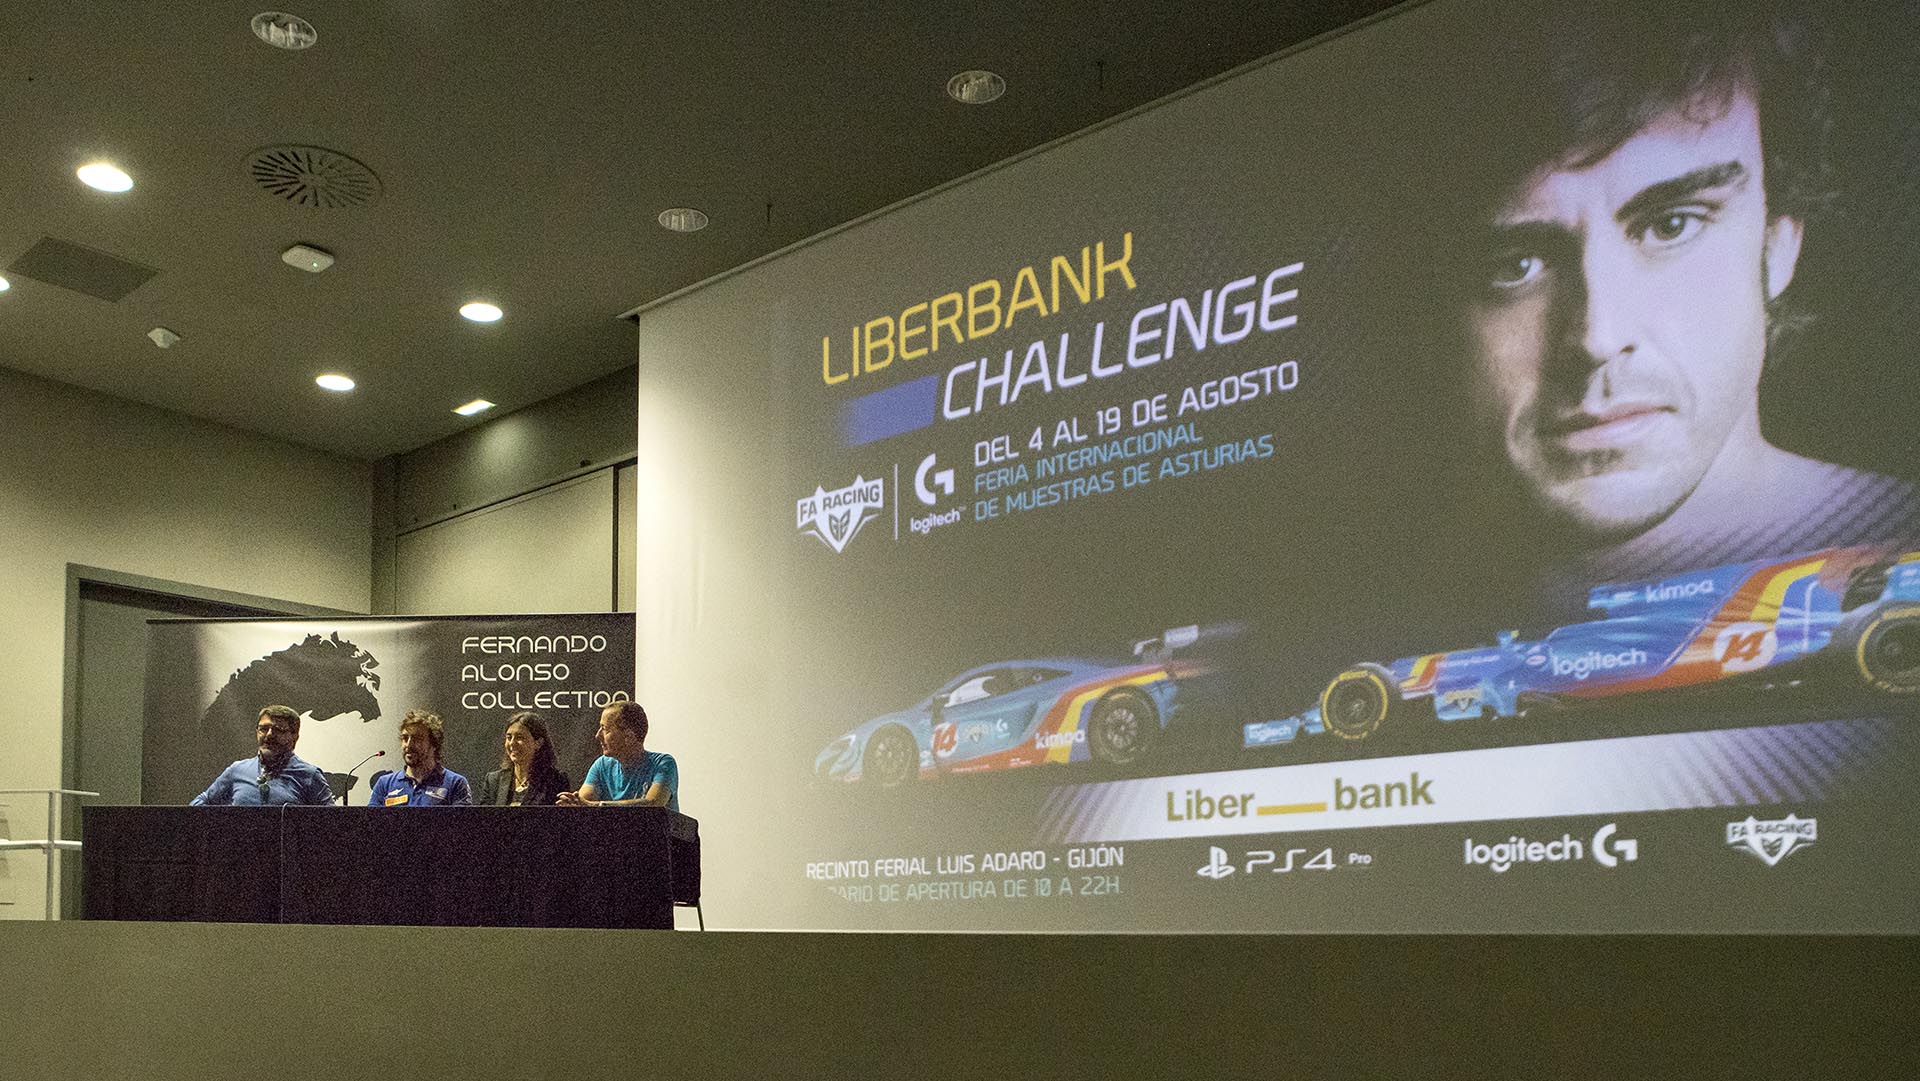 Liberbank Challenge - FA Racing Logitech G